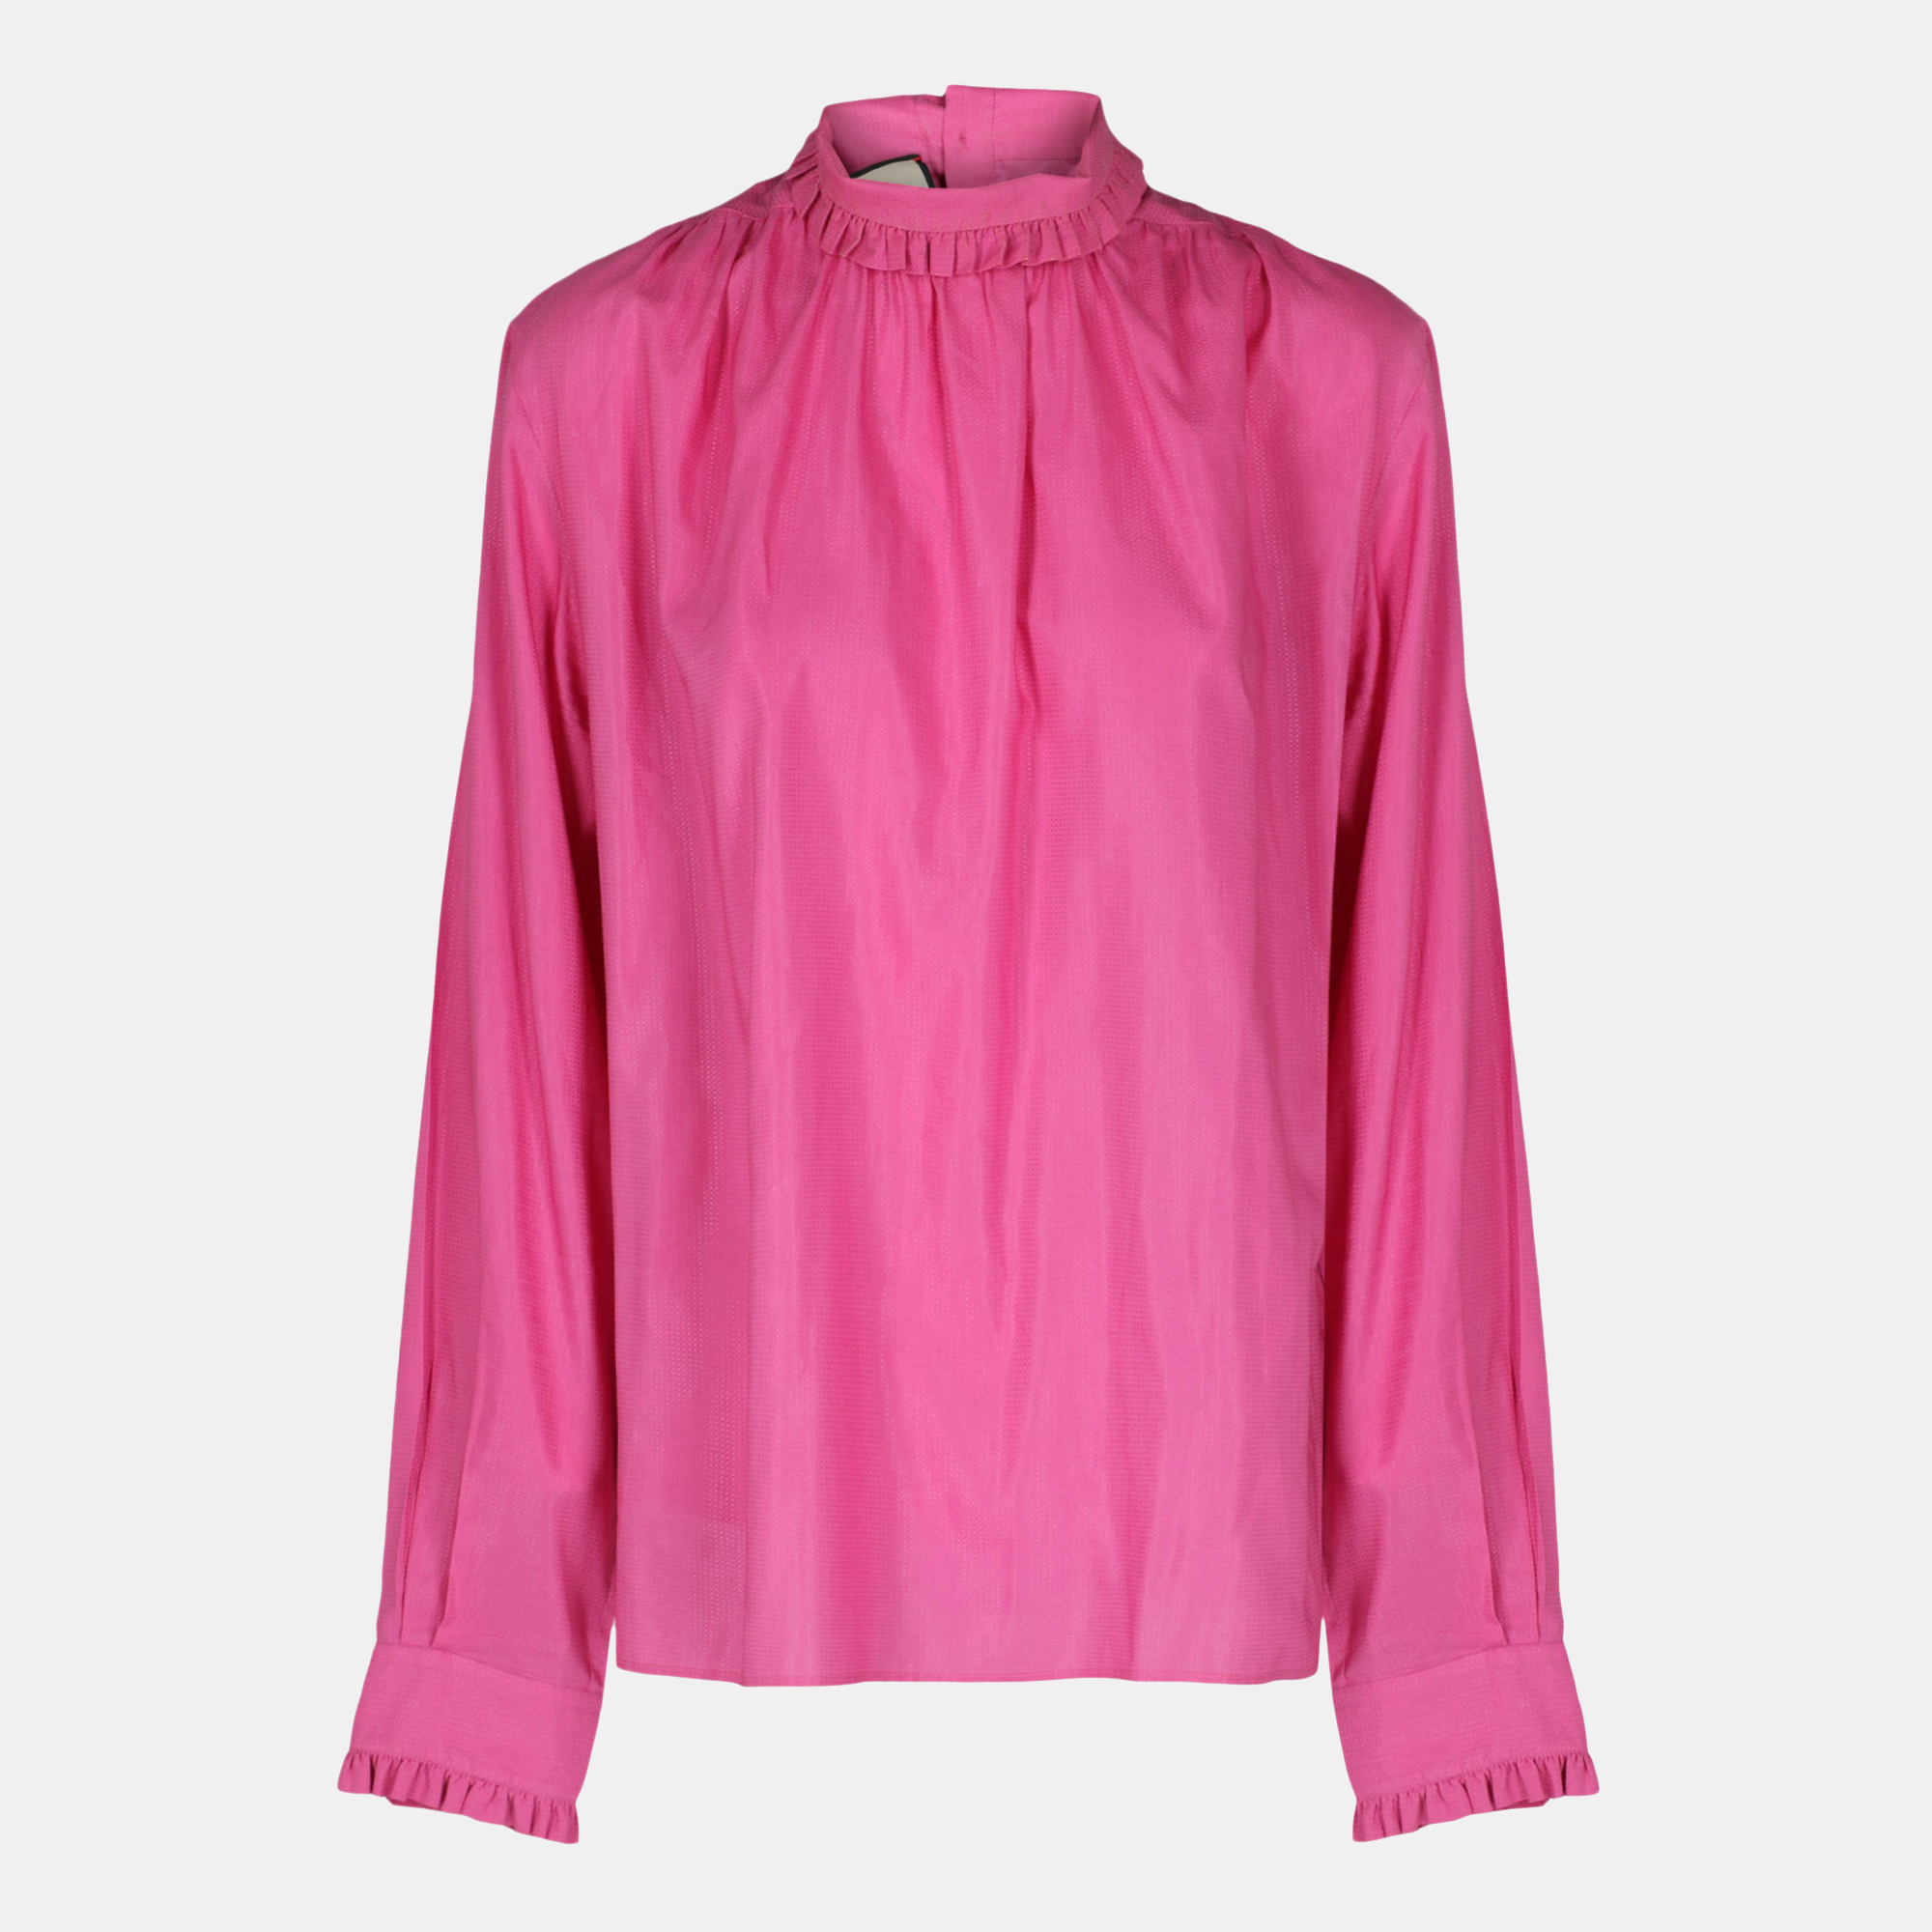 Gucci  Women's Cotton Shirt - Pink - XL